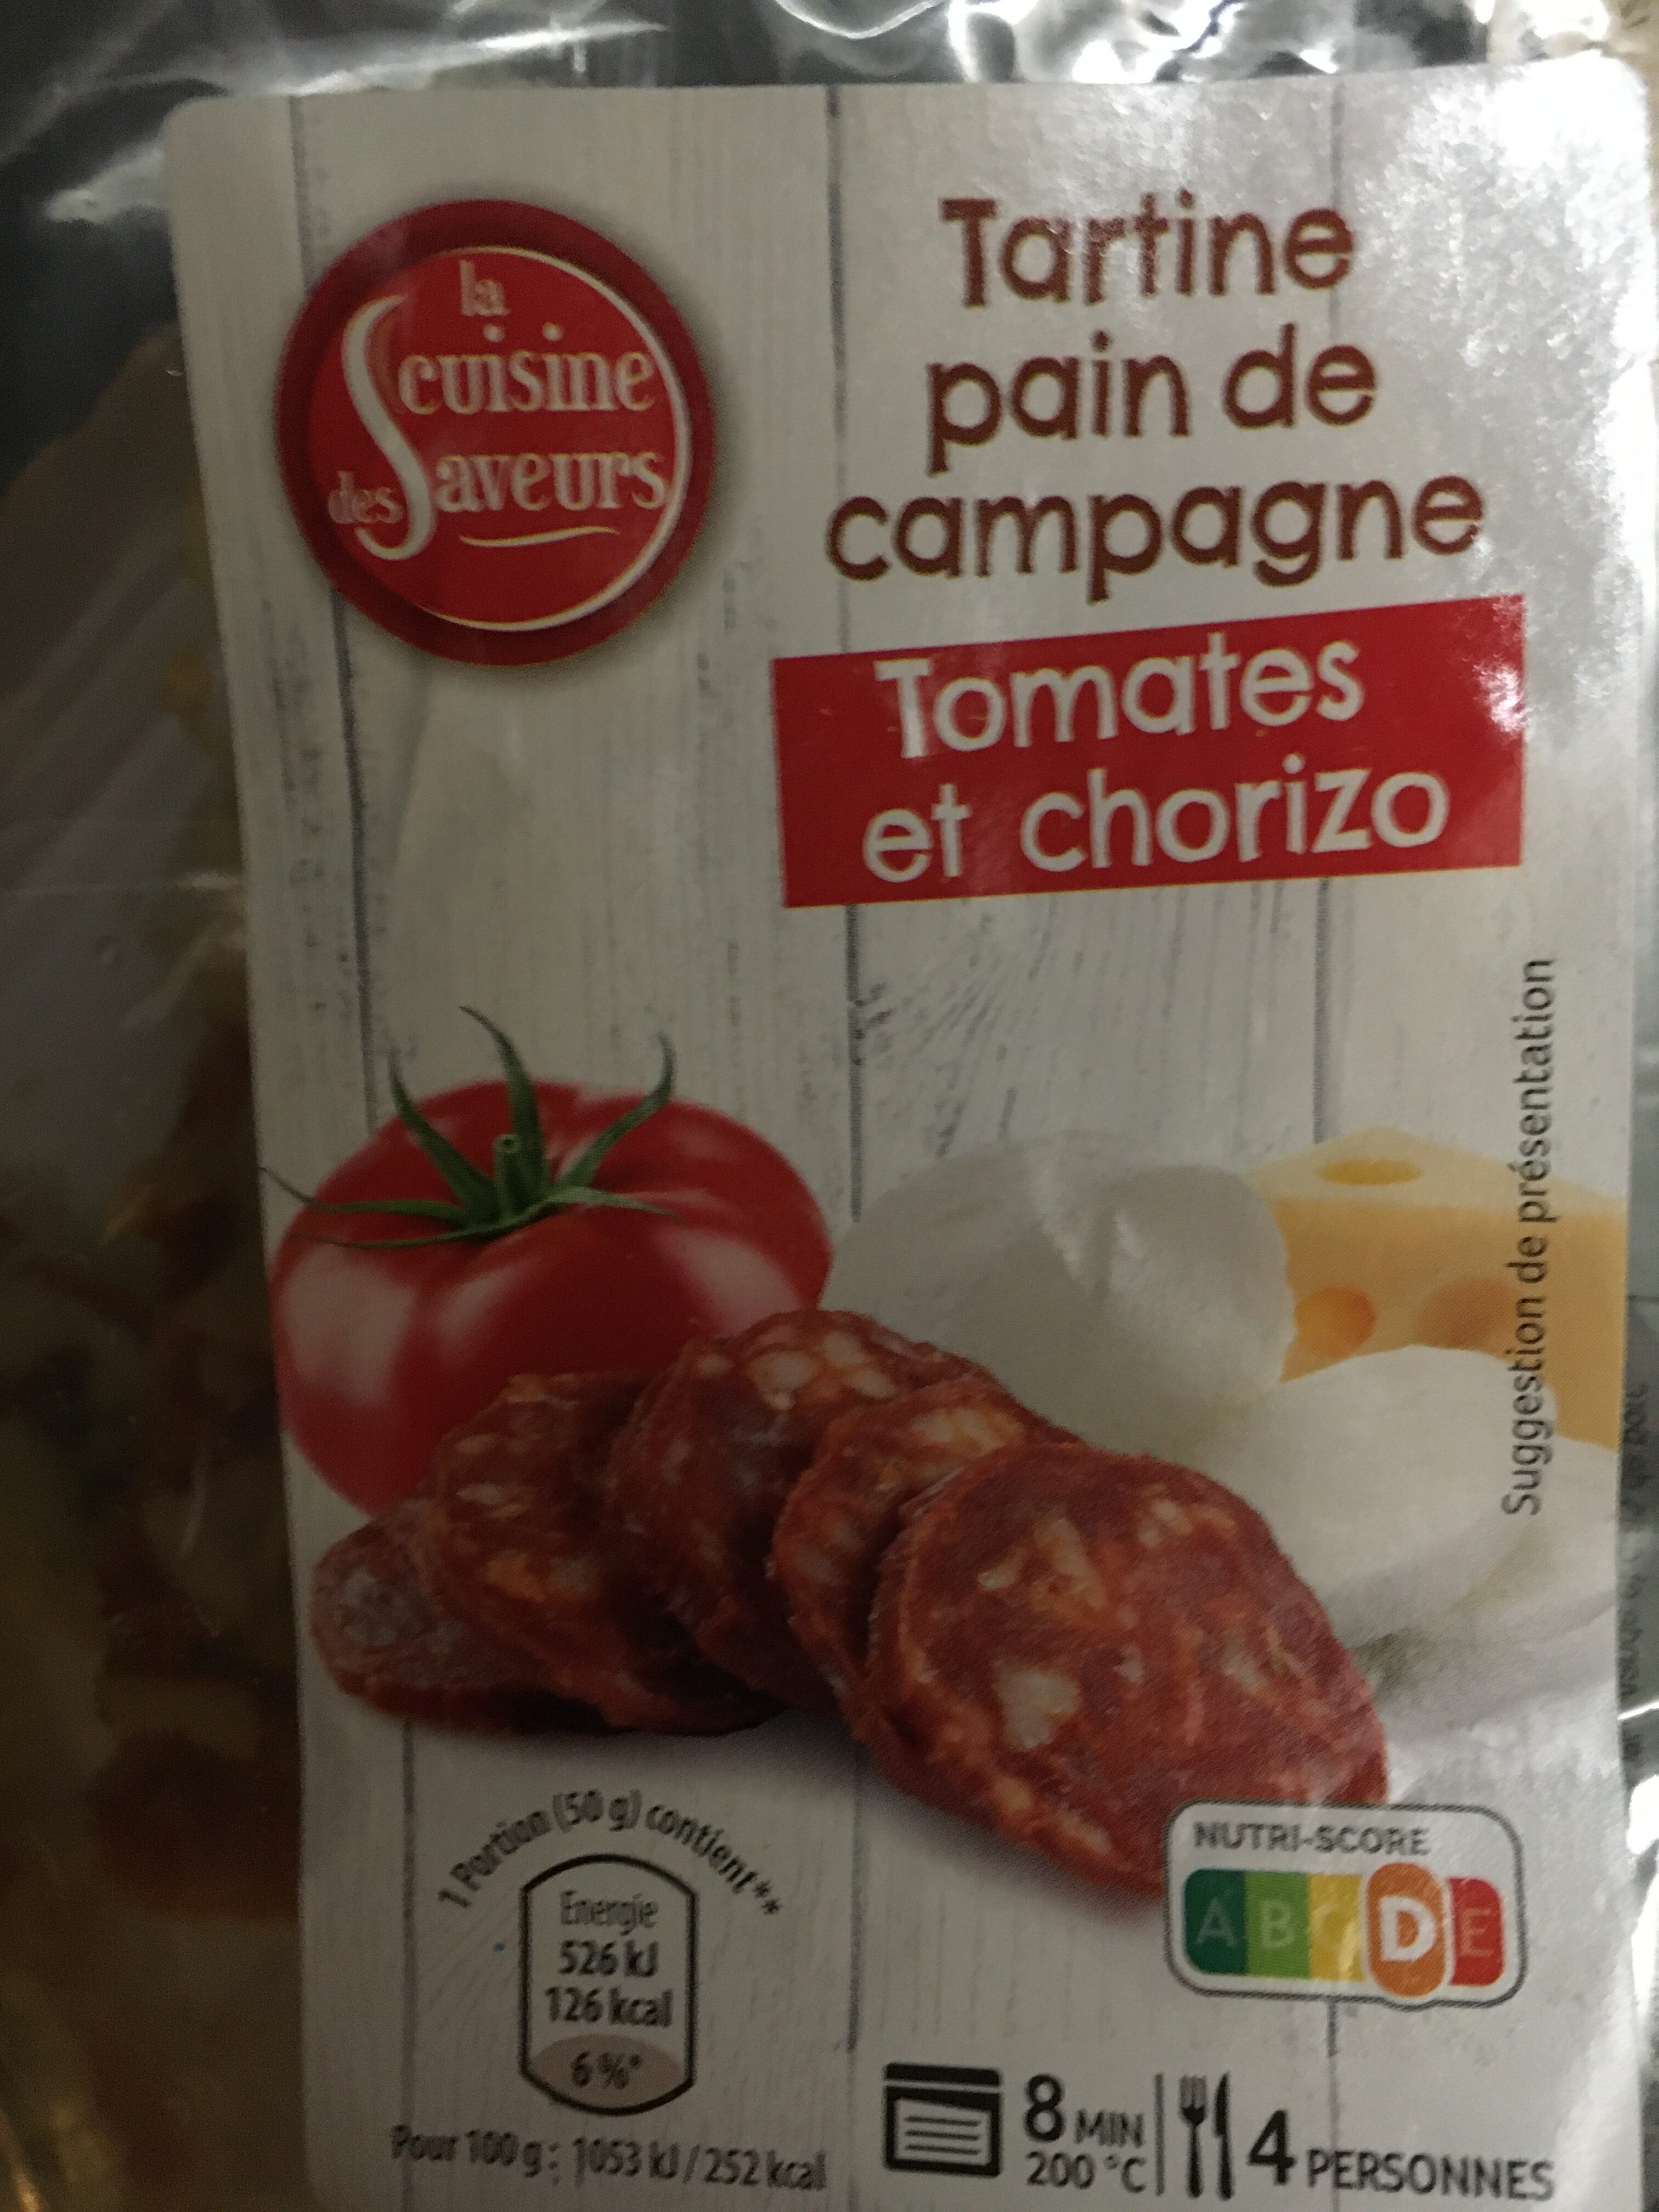 Tartine pain de campagne tomates et chorizo - Product - fr